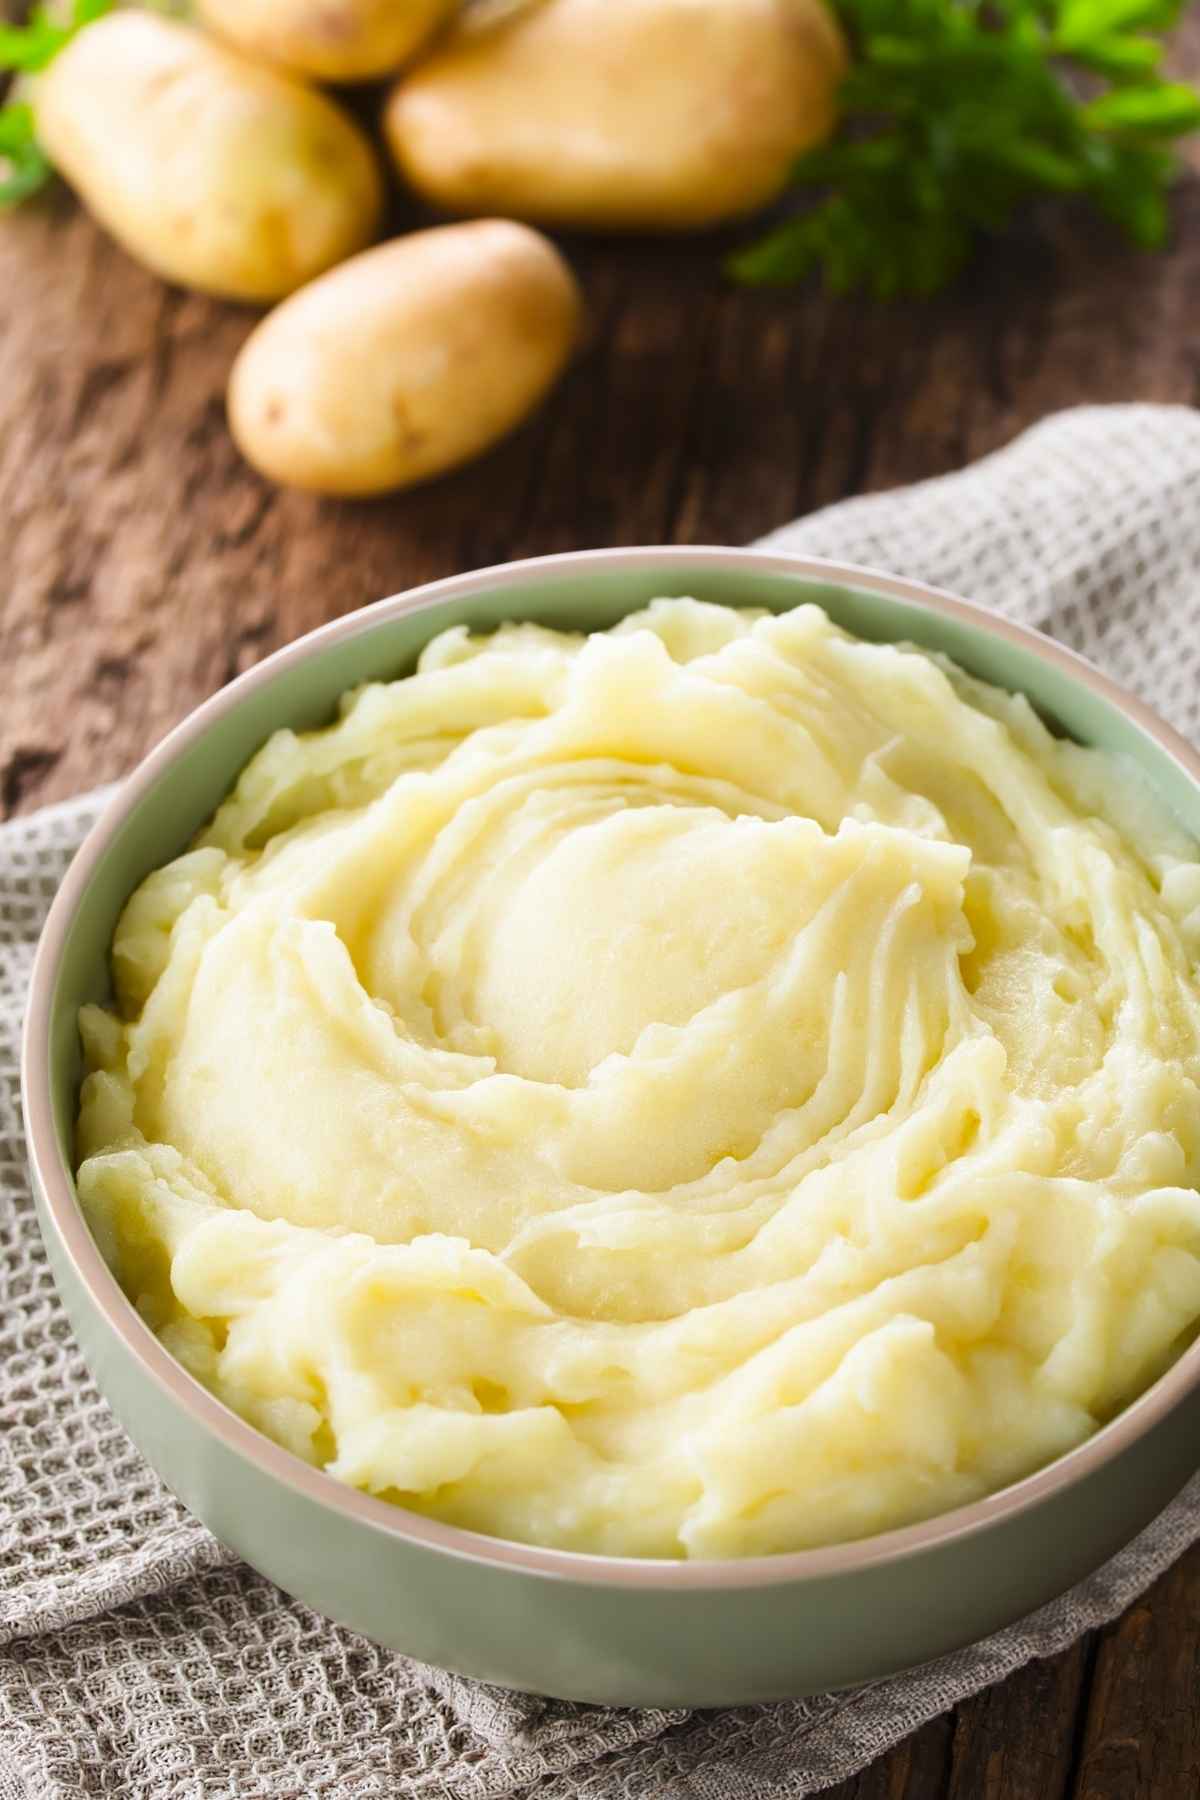 Mashed potatoes 